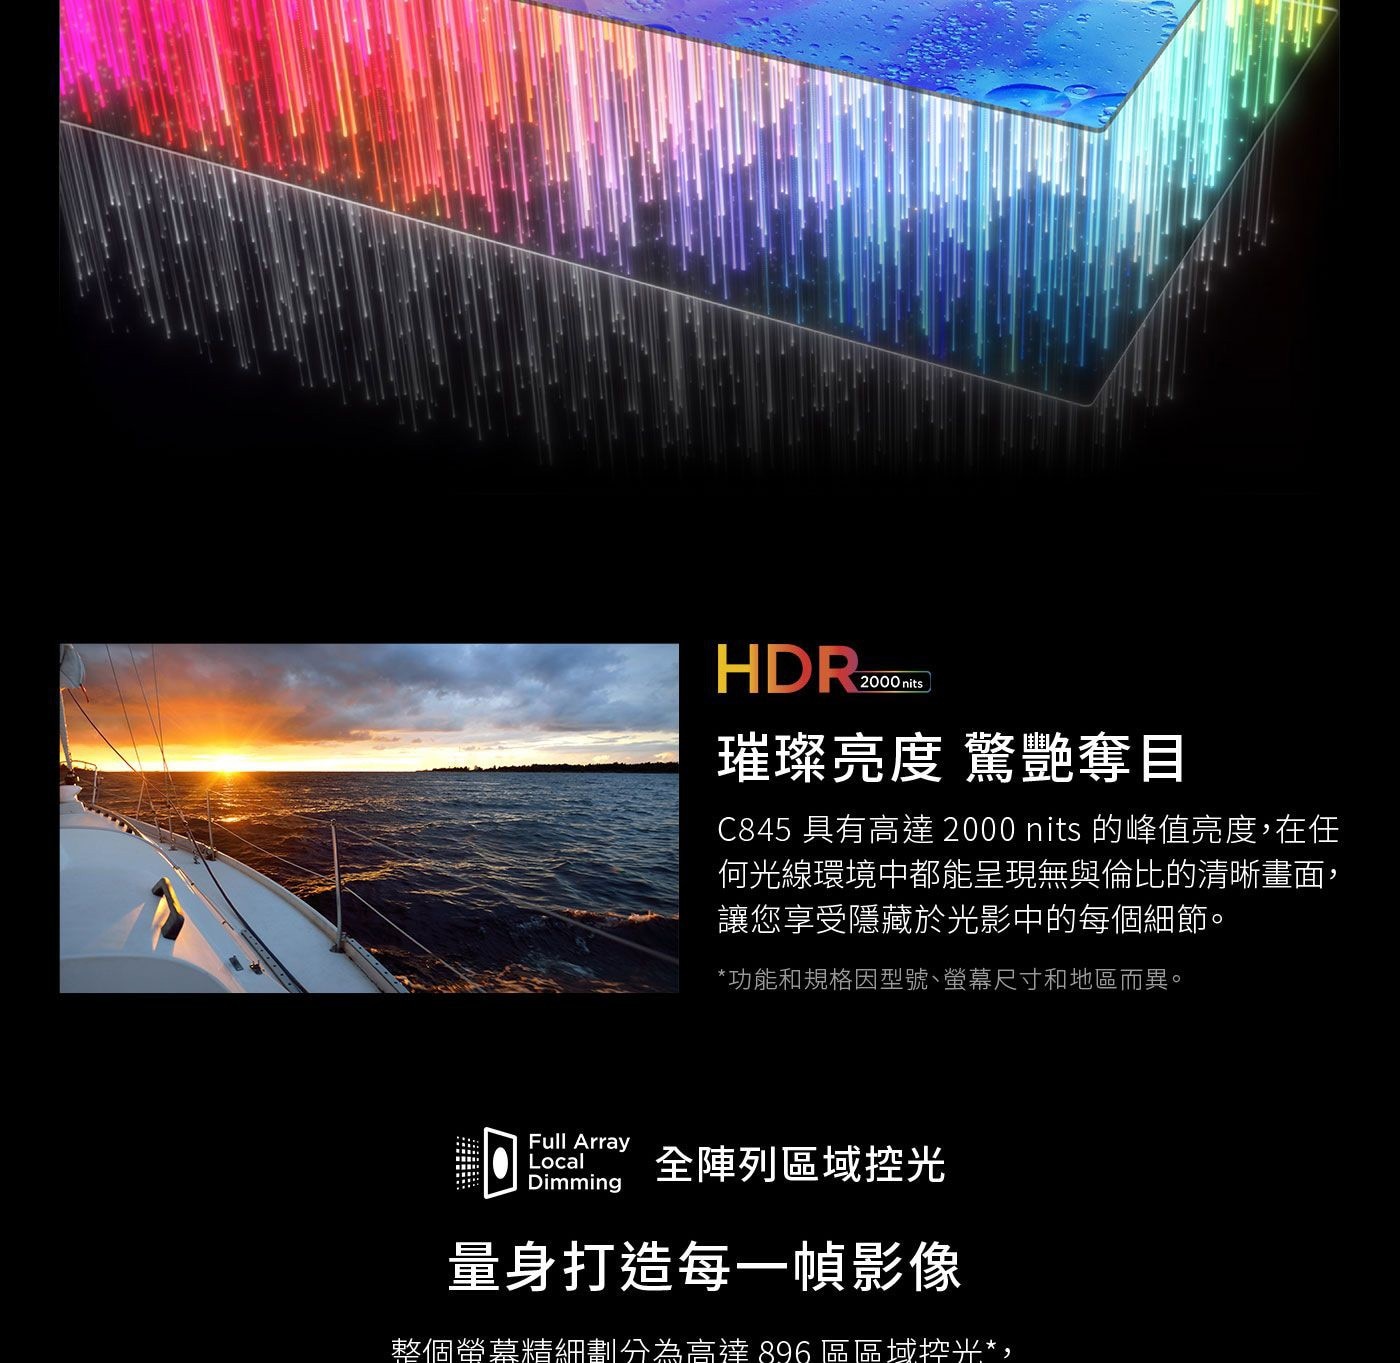 TCL 85吋 4K Mini LED QLED Google TV 量子智能連網液晶顯示器 85C845璀璨亮度驚艷奪目HDR 2000 nits璀璨亮度 驚艷奪目